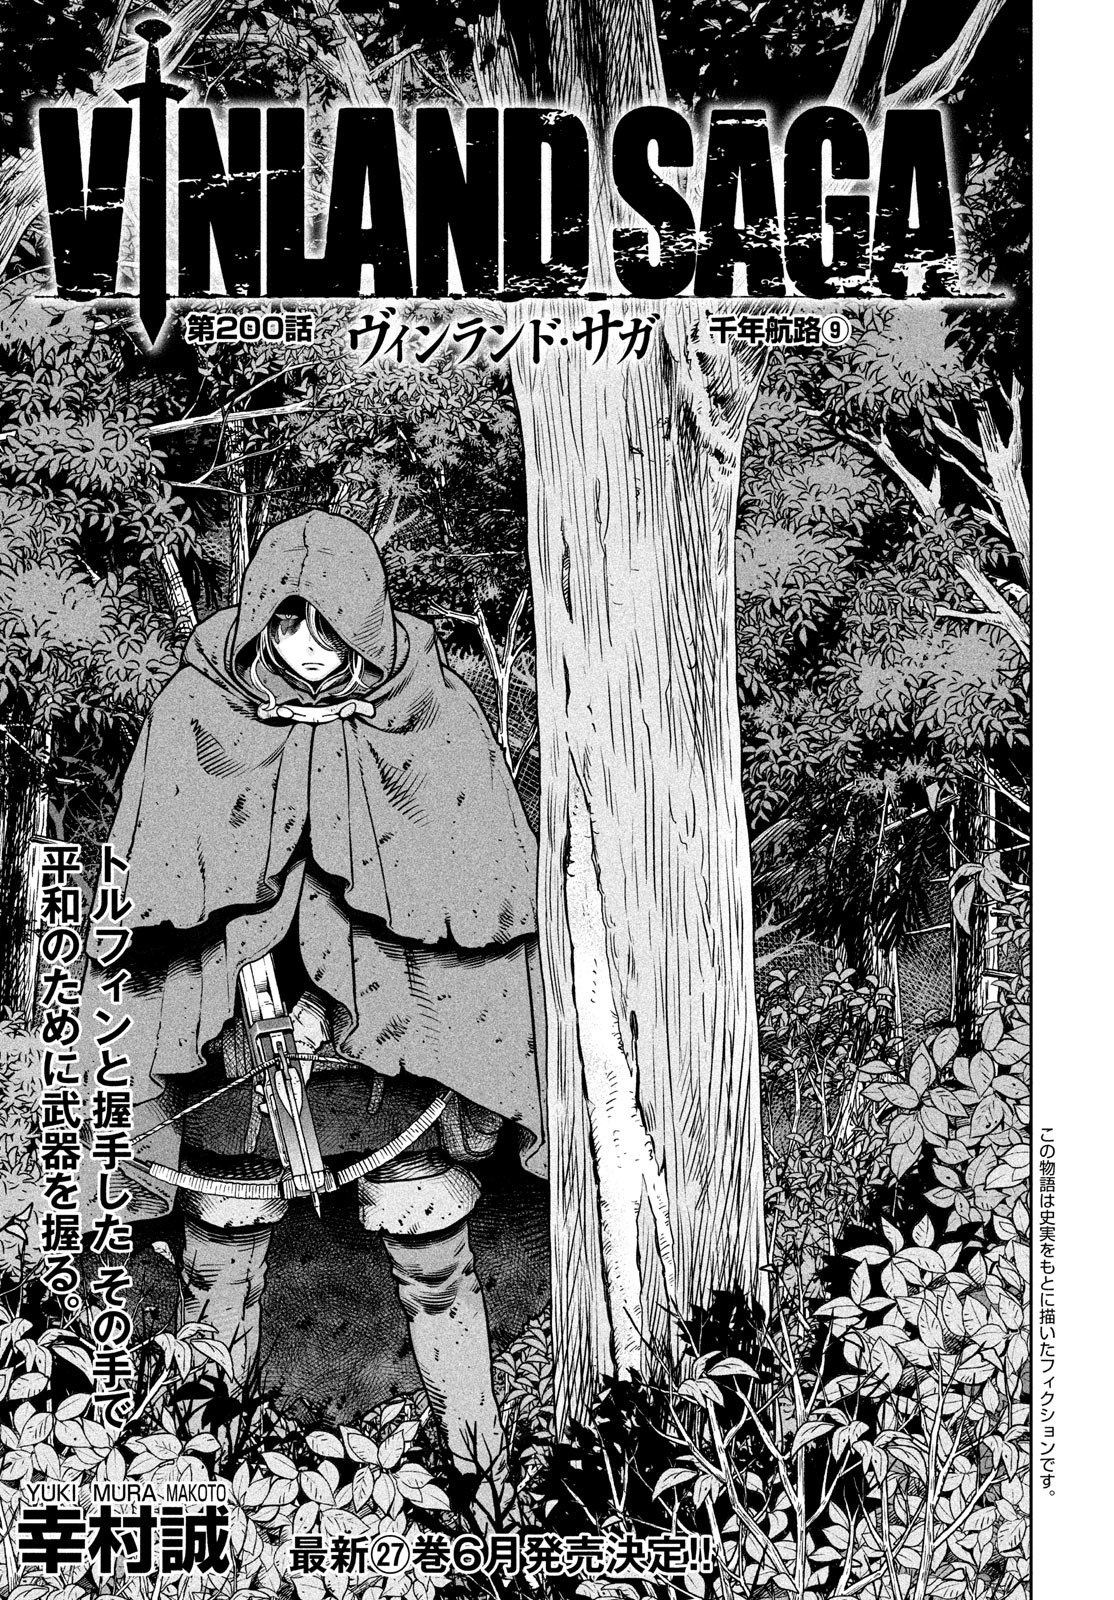 Vinland Saga (manga) - Wikipedia